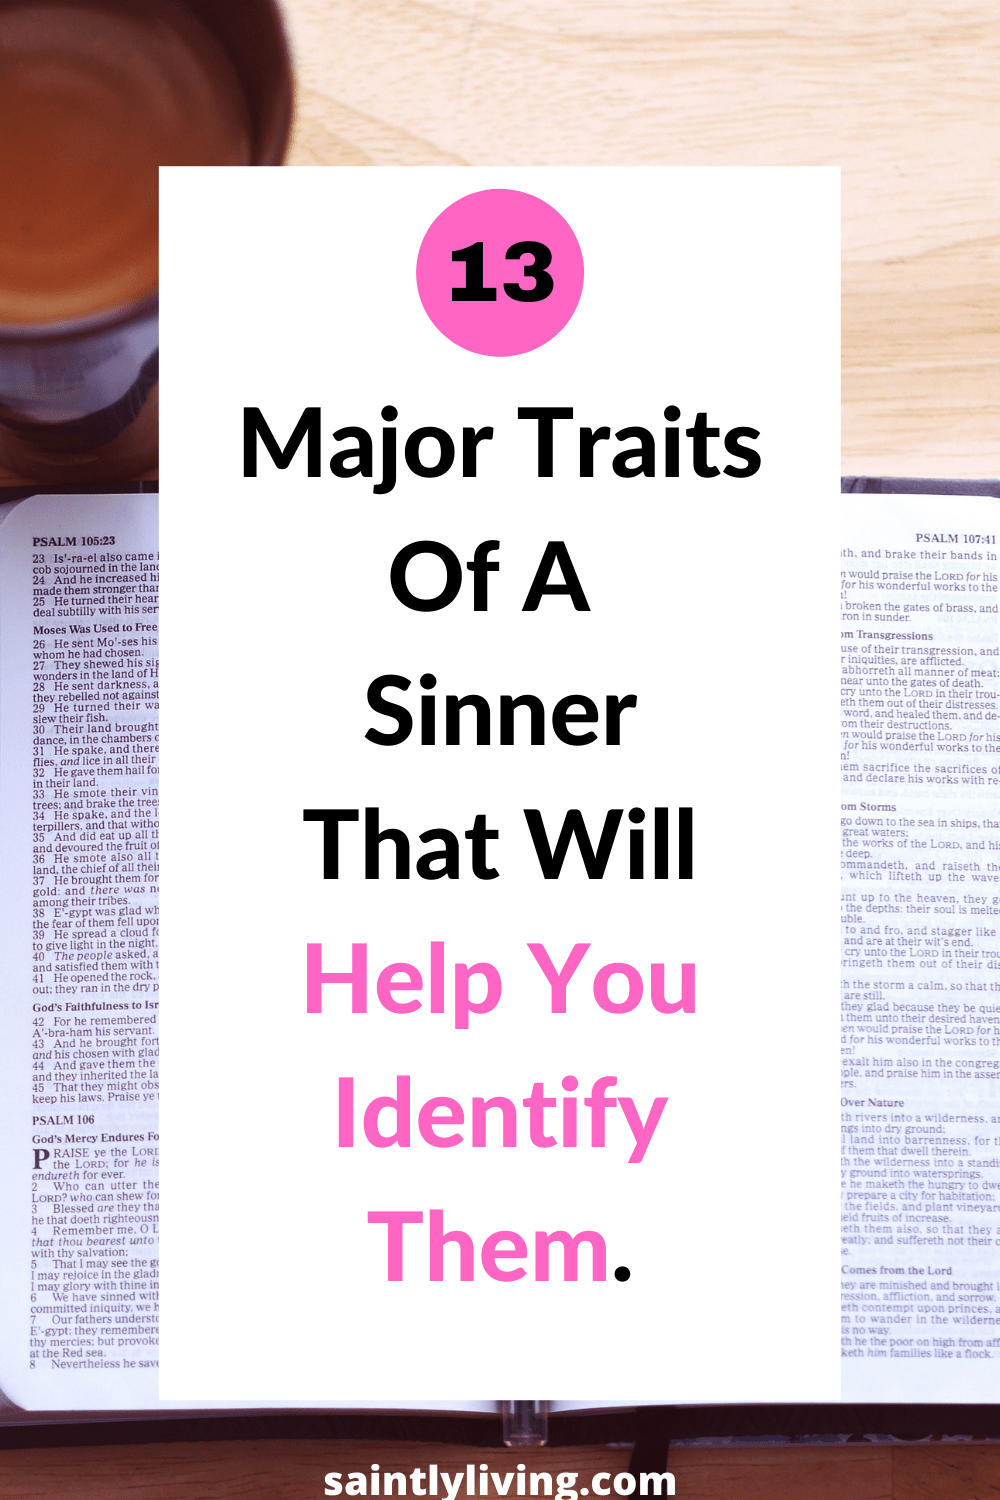  characteristics of a sinner.